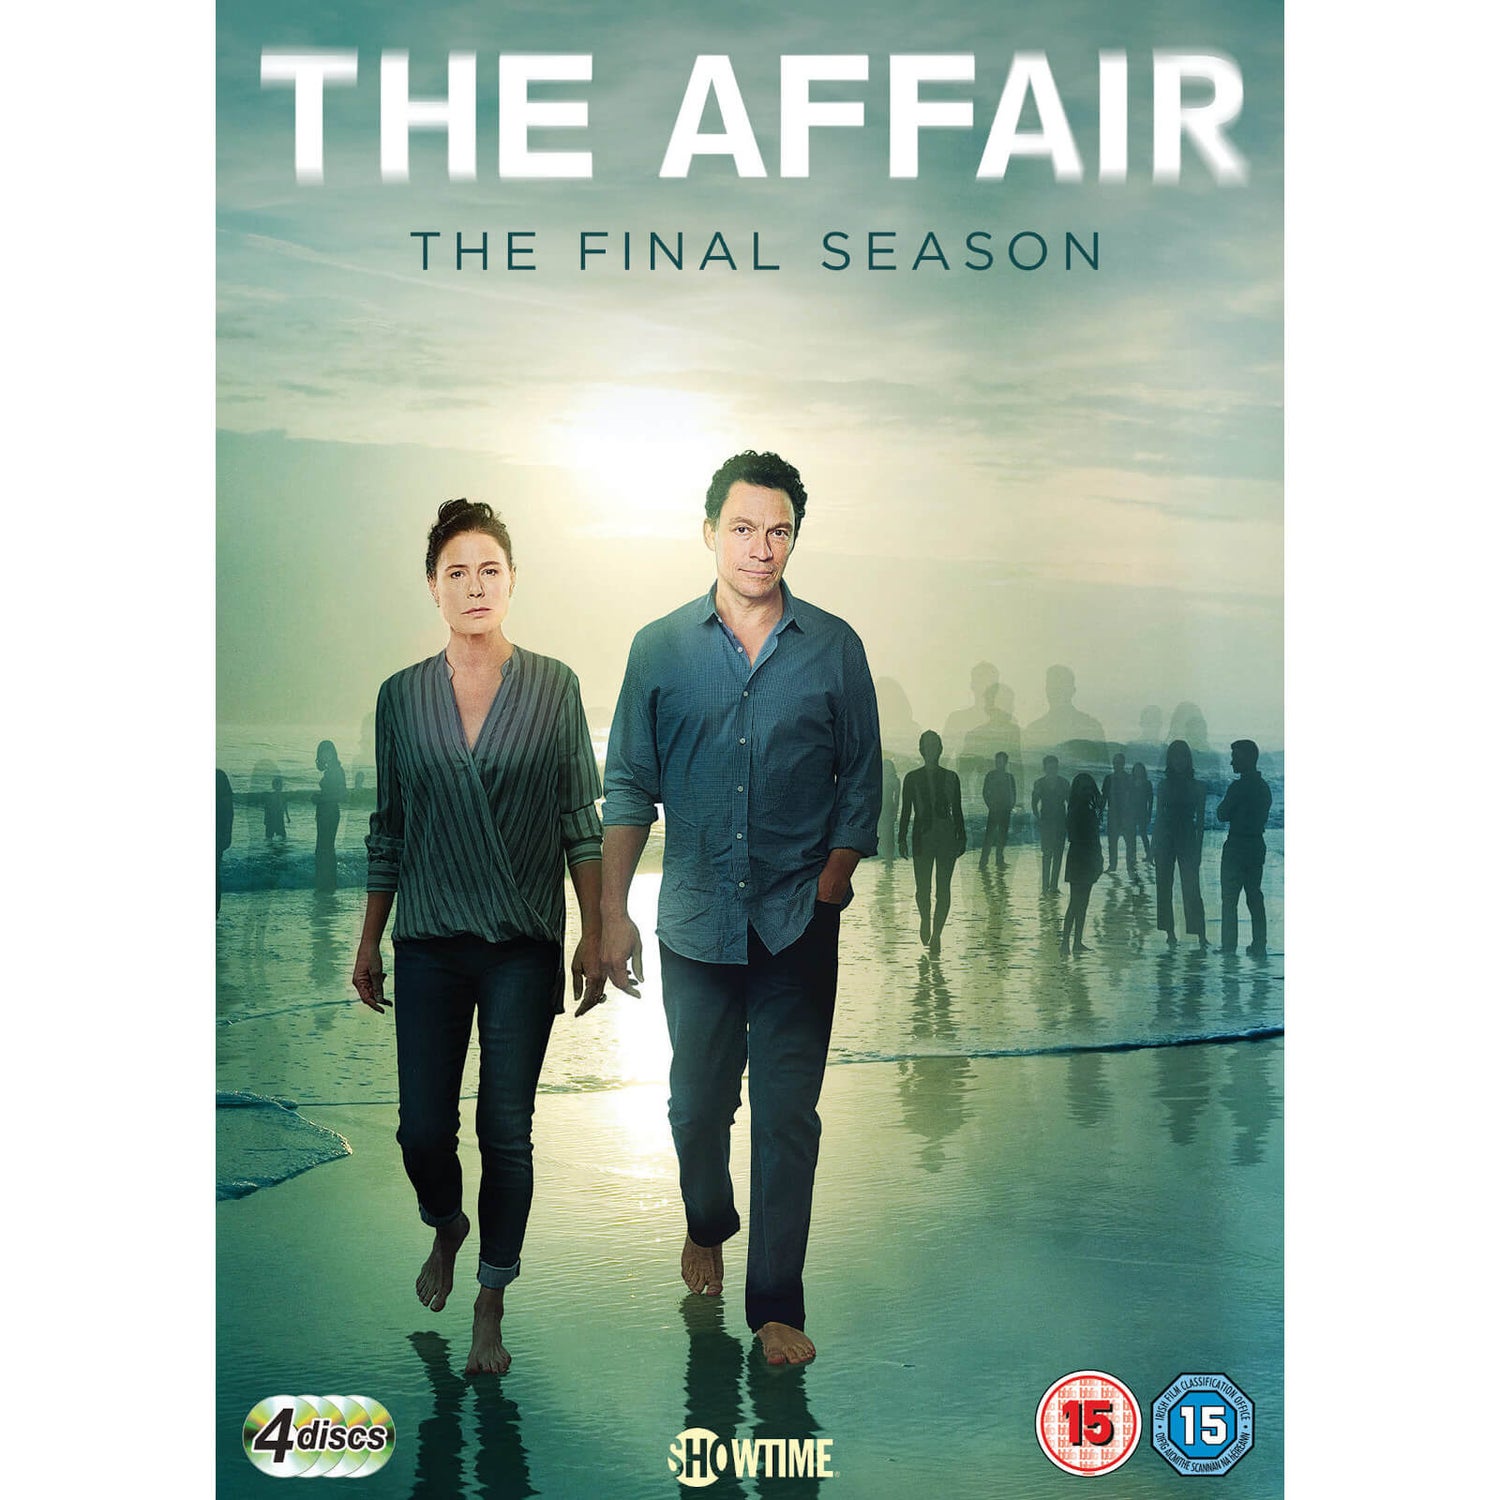 The Affair - Season 5